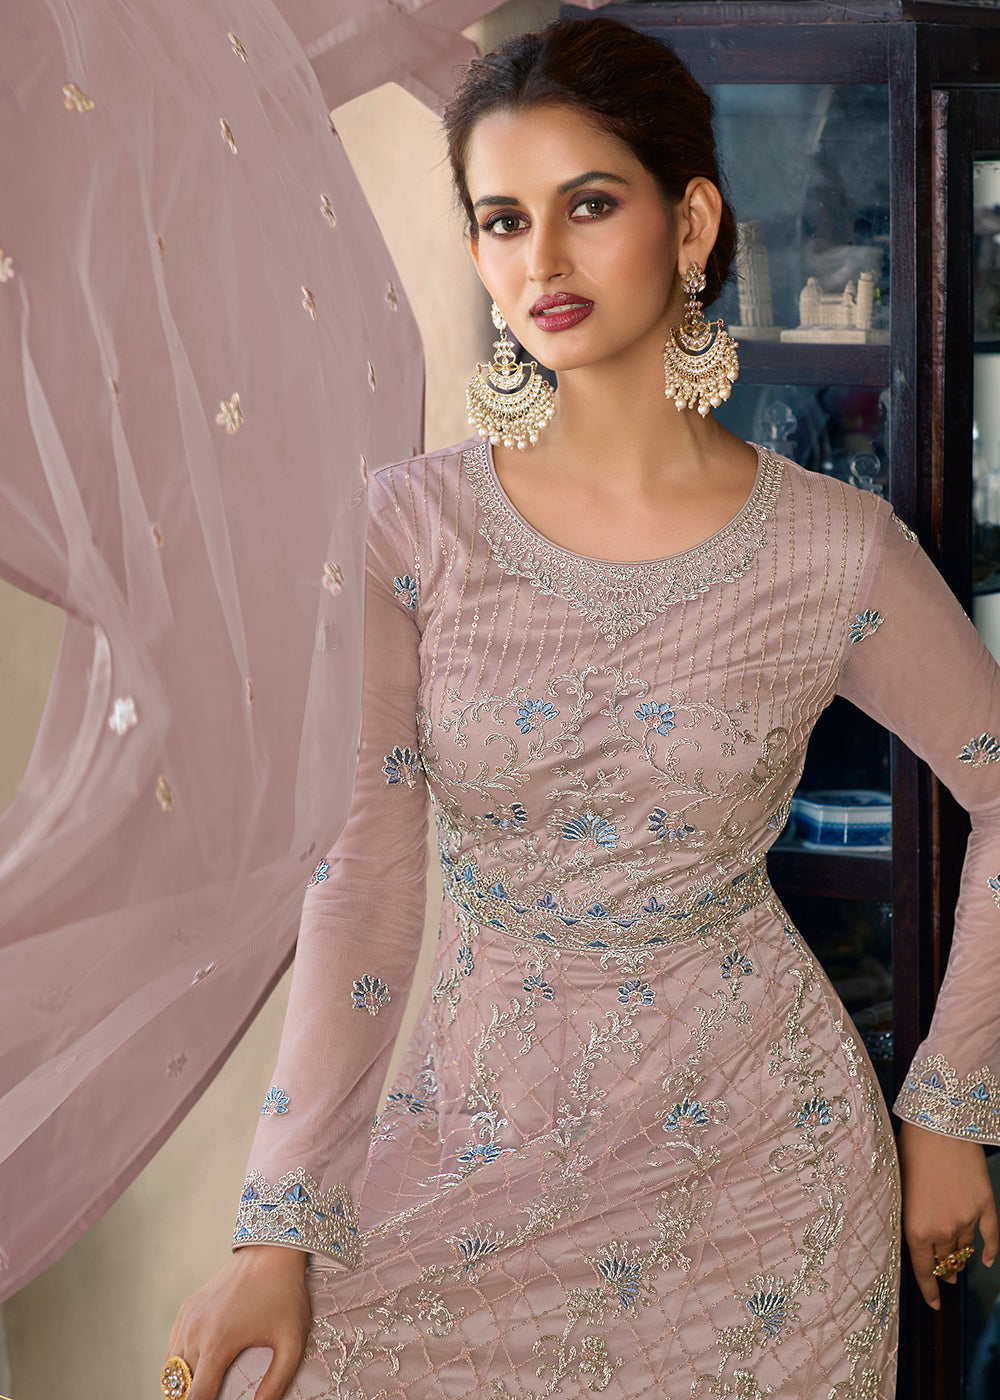 Buy Now Mauve Pink Wedding Party Net Designer Anarkali Suit Online in USA, UK, Australia, New Zealand, Canada & Worldwide at Empress Clothing.